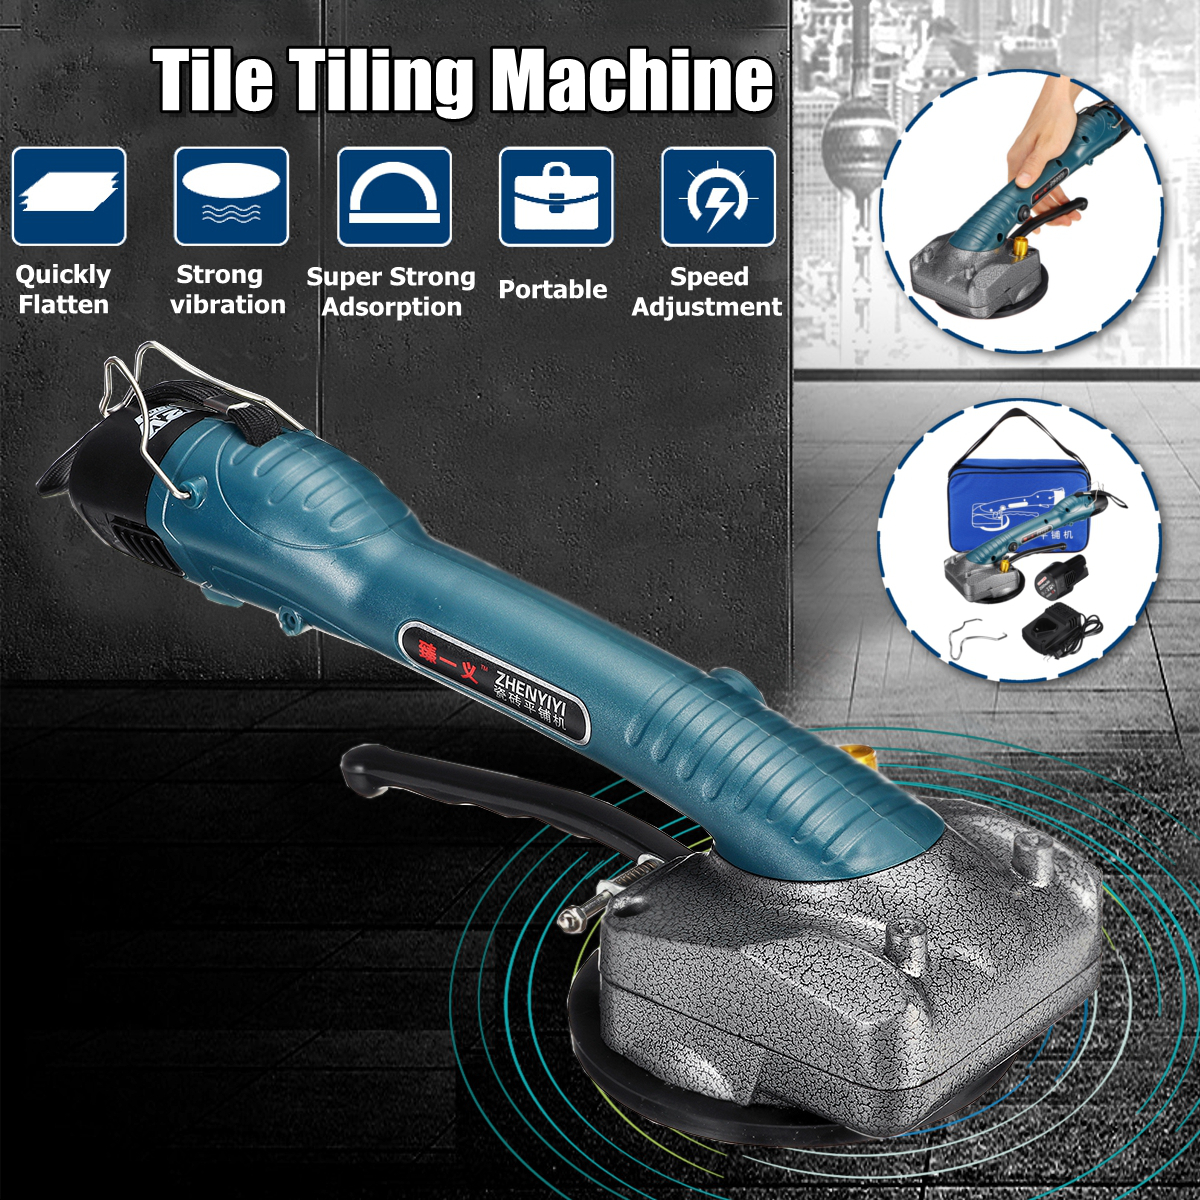 Tile-Machine-Vibrators-Tile-Tiling-Machine-Electric-Floor-Vibrator-Tiling-Artifact-Tile-Tool-1485800-1